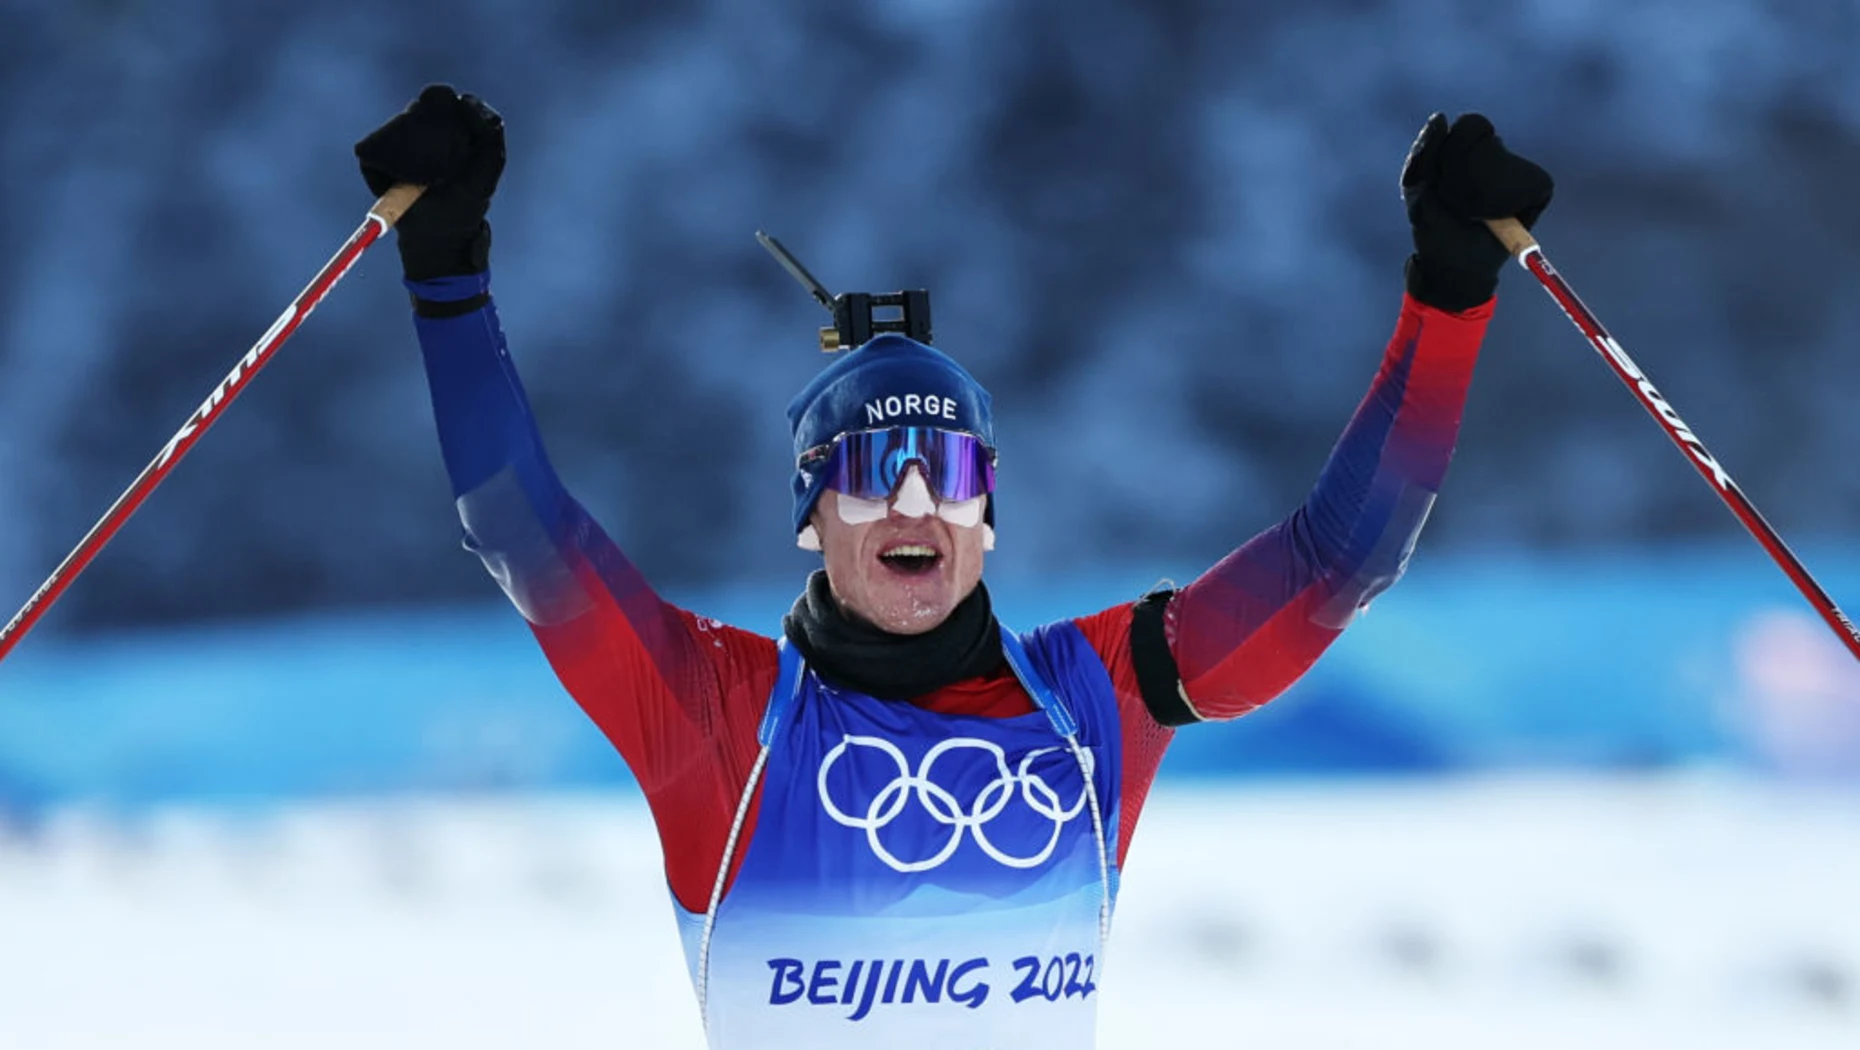 Johannes Thinges Boe wins fourth Beijing 2022 biathlon gold bagging 15km mass start title